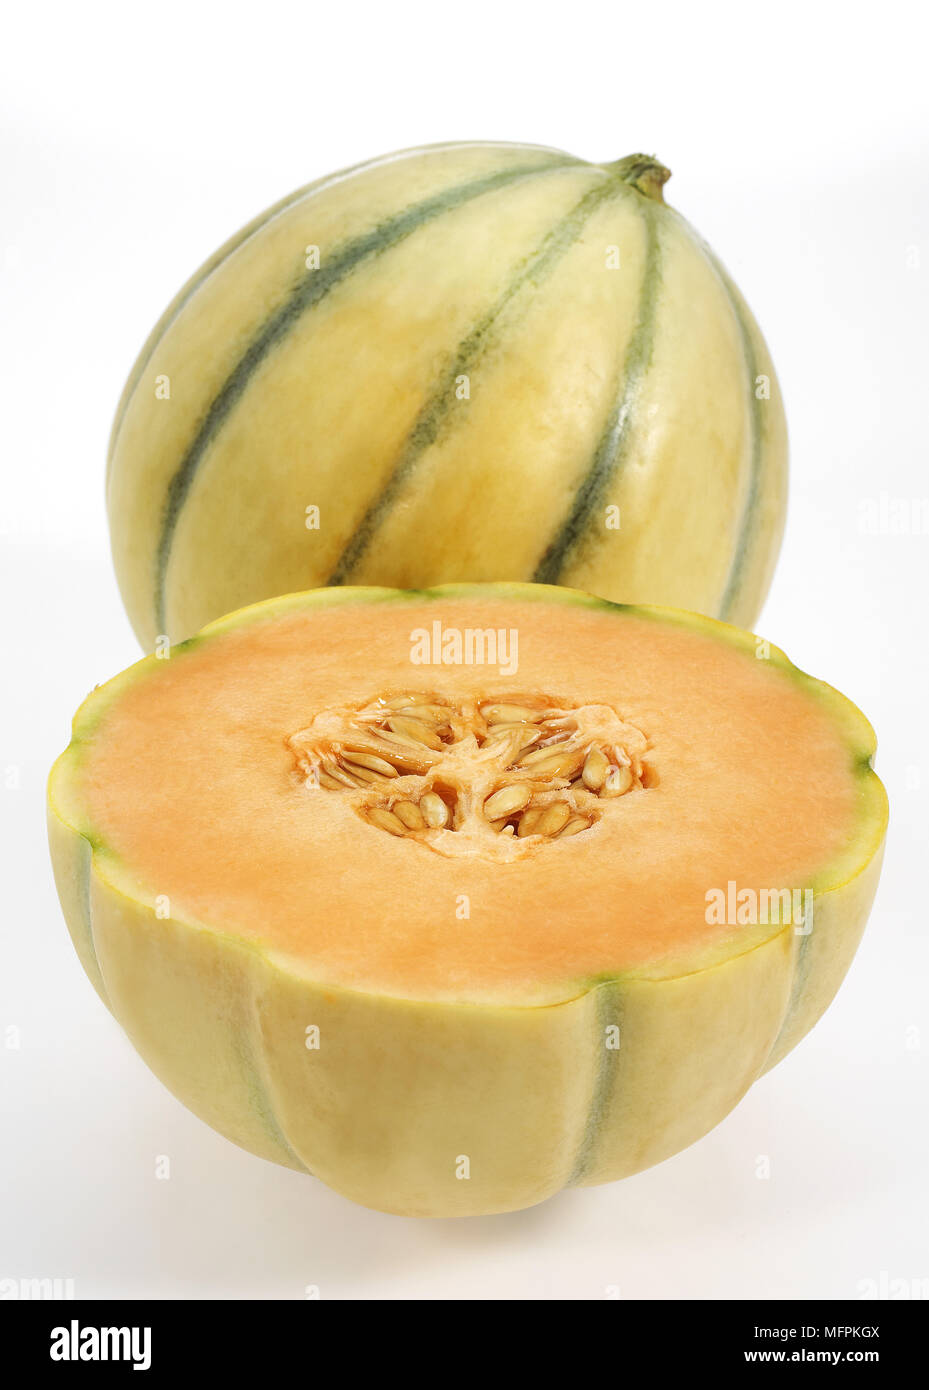 Cavaillon Melon, cucumis melo, Fruits on White Background Stock Photo